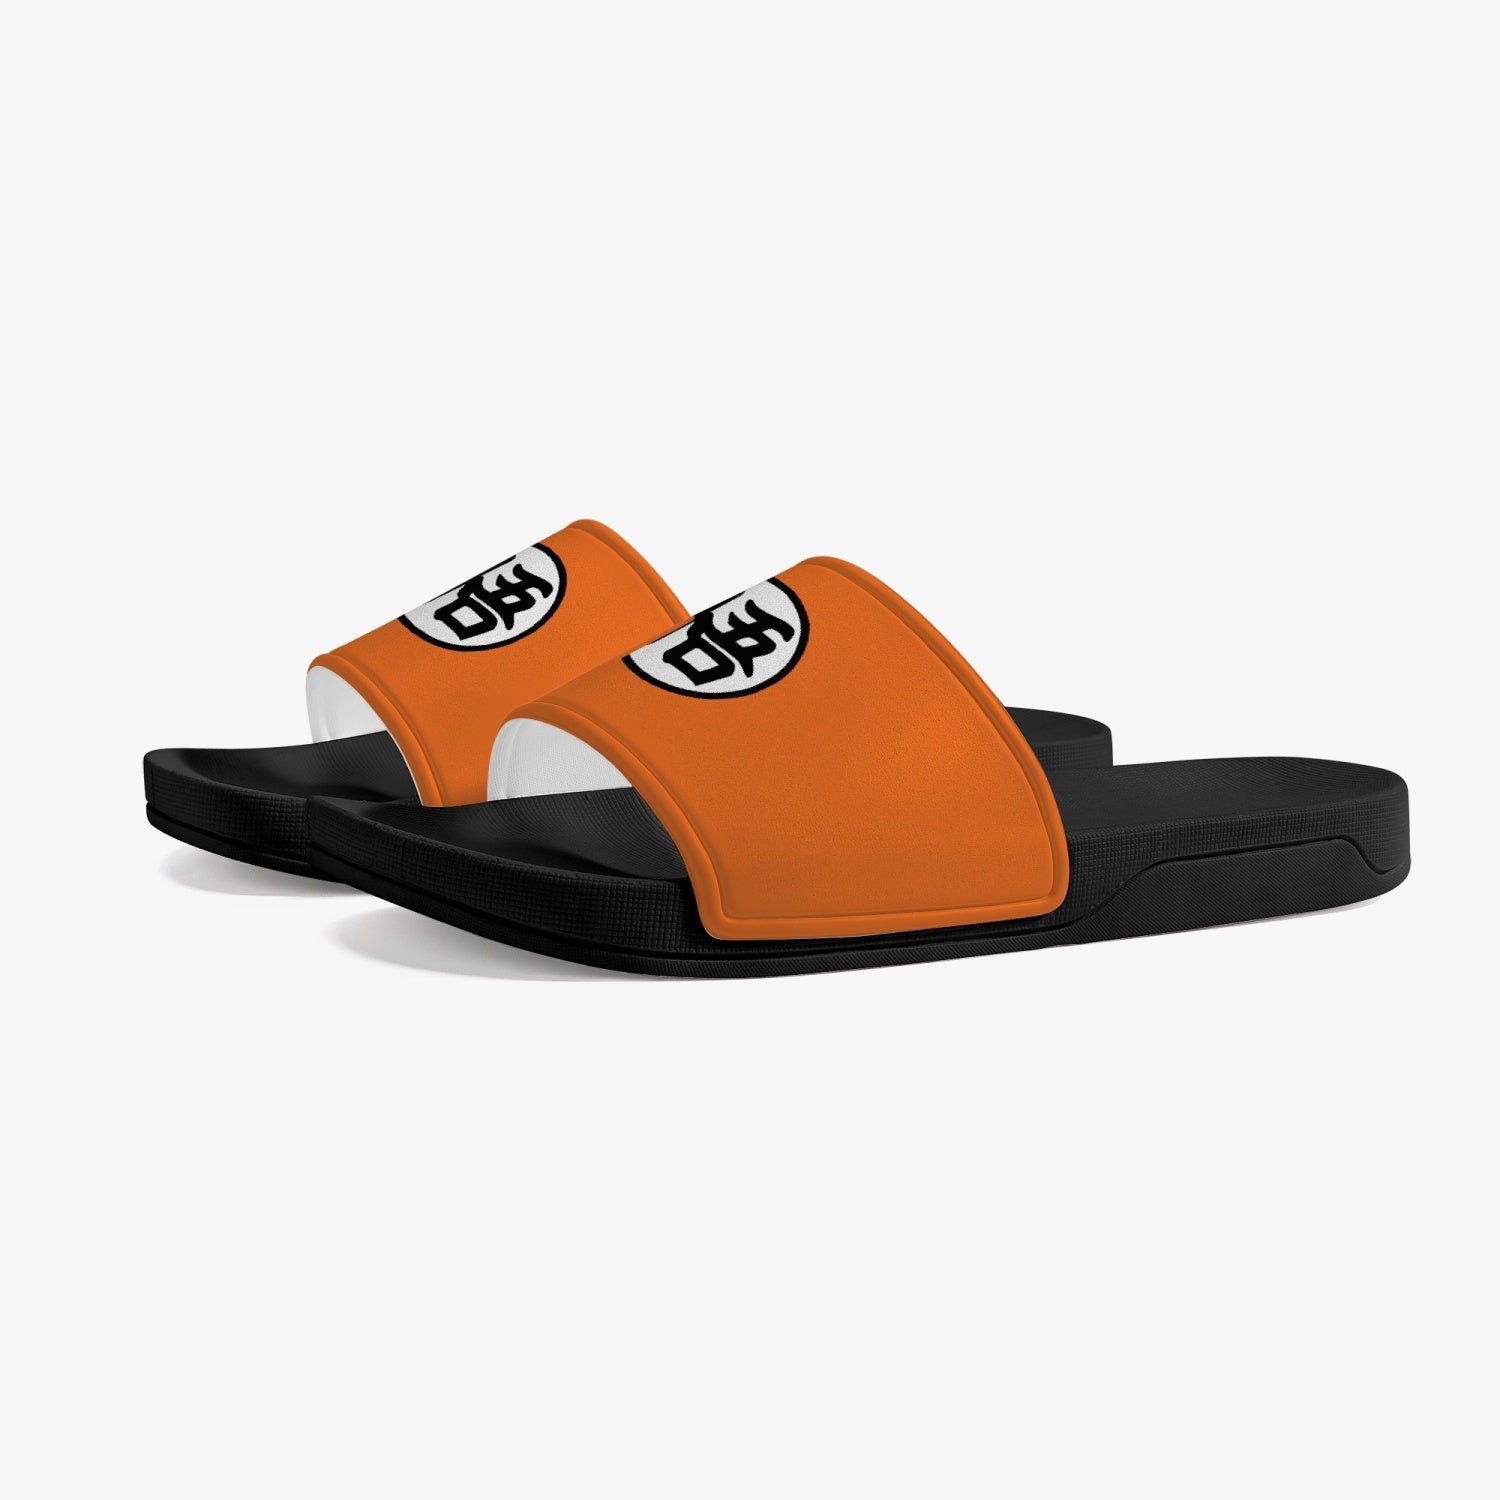 Goku Dragon Ball Z Slides Custom Sandals-Men-US5.5/EU38-Anime Shoe Shop